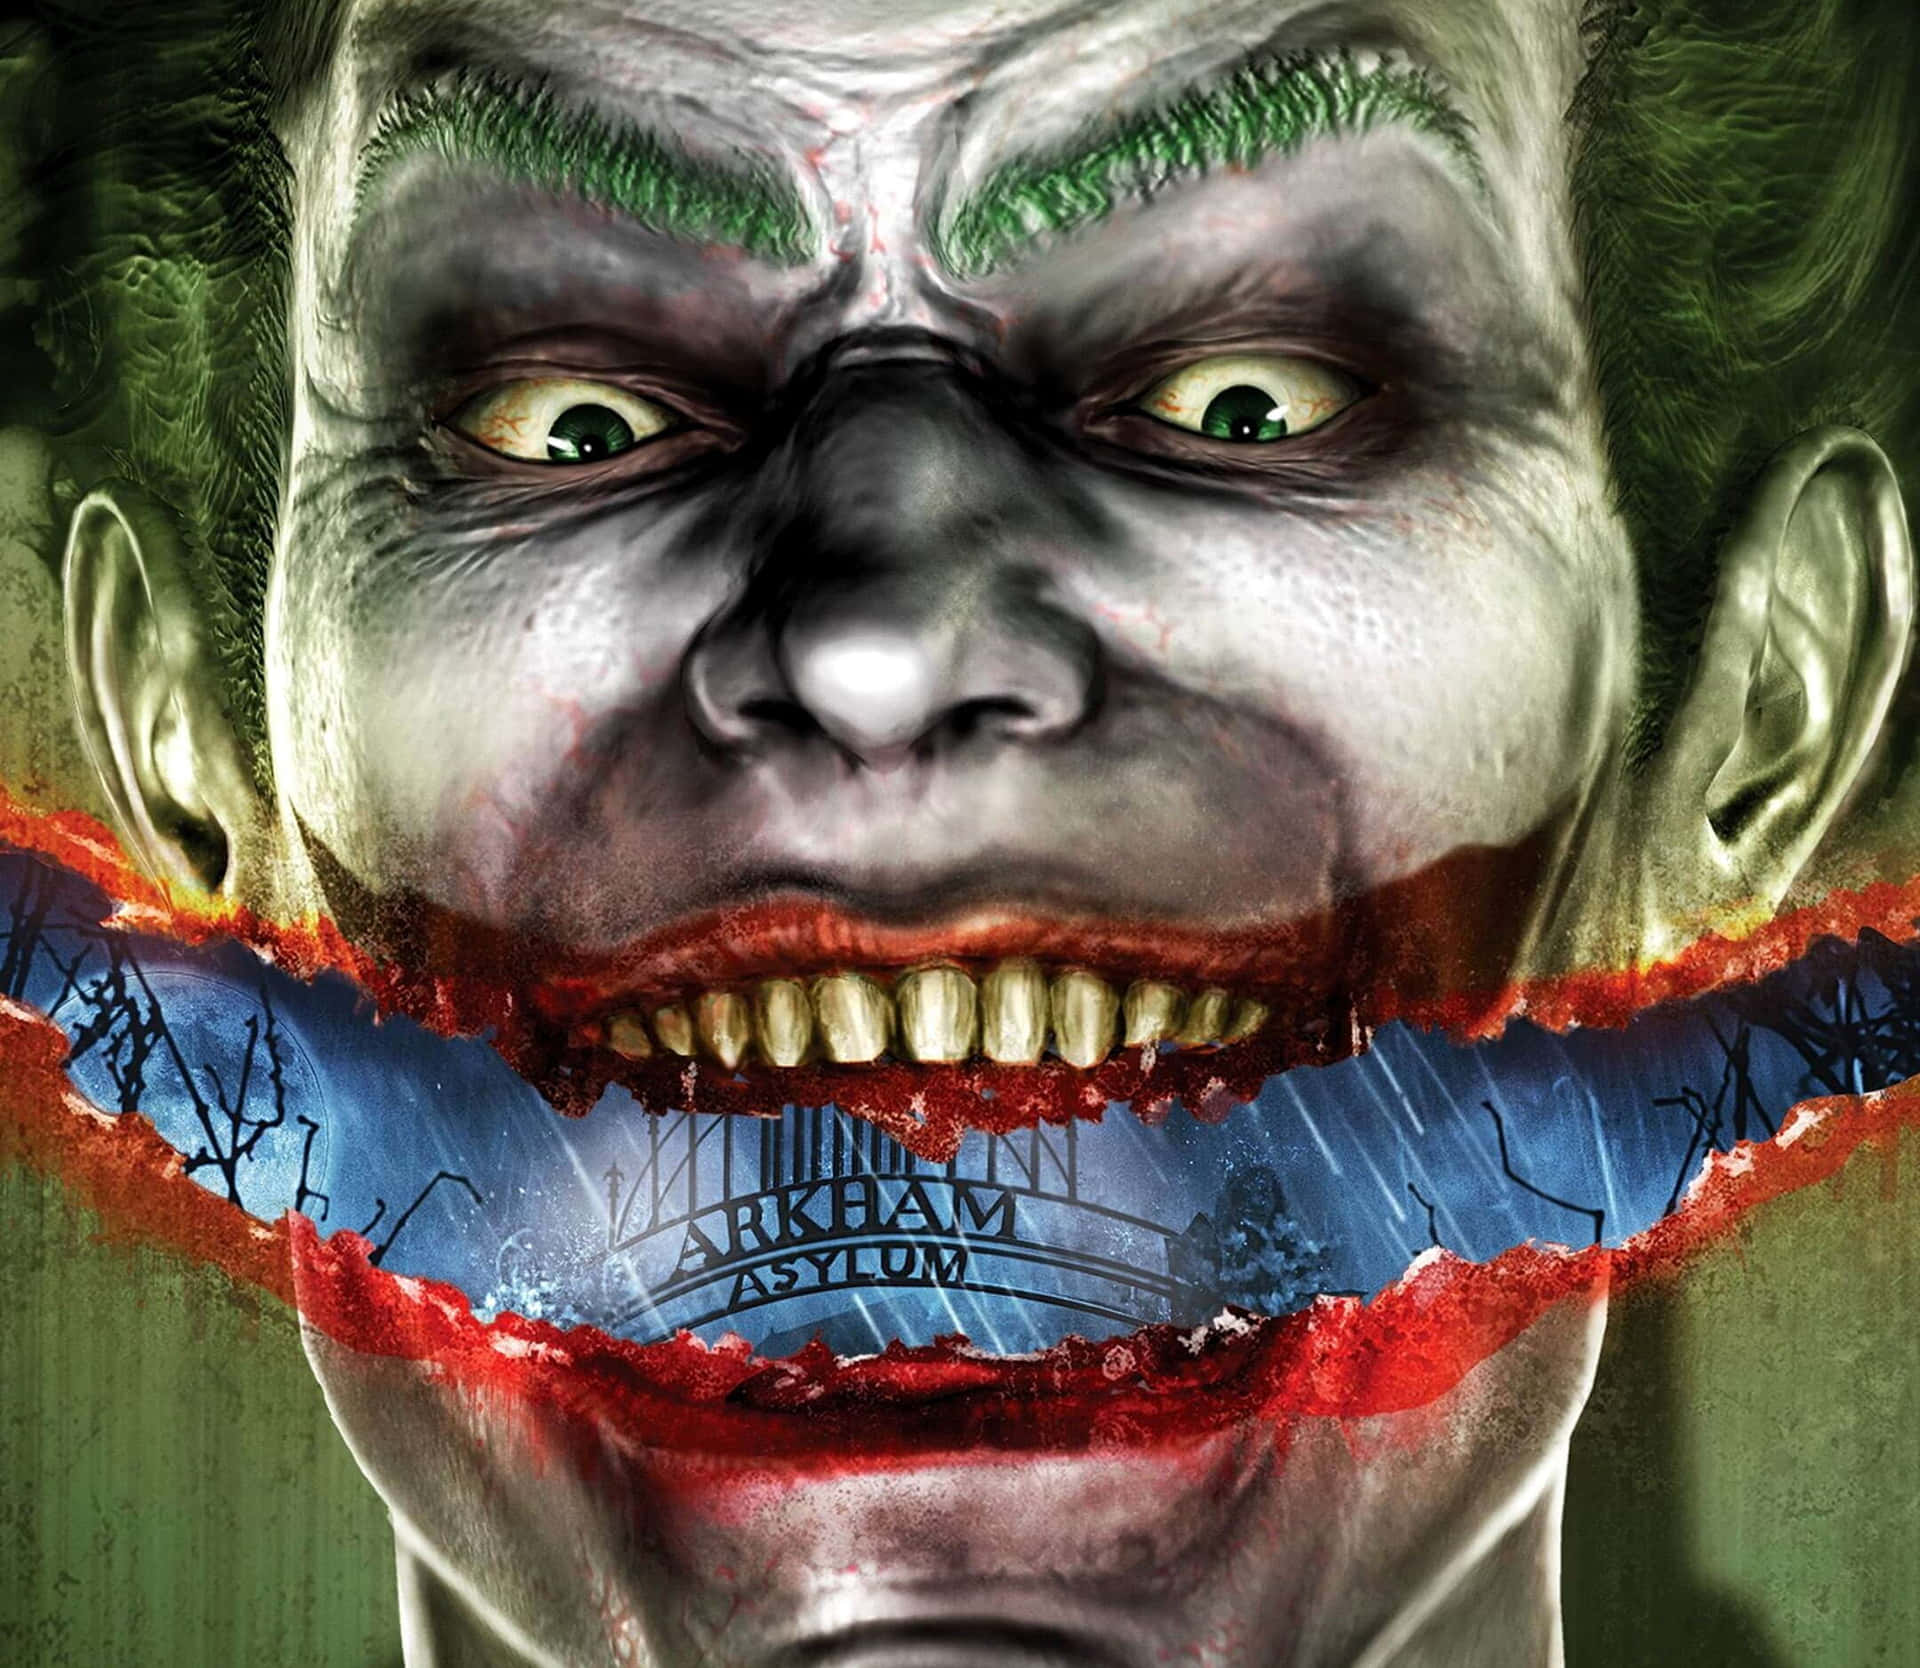 Joker Laughing Maniacally In Chilling Movie Scene